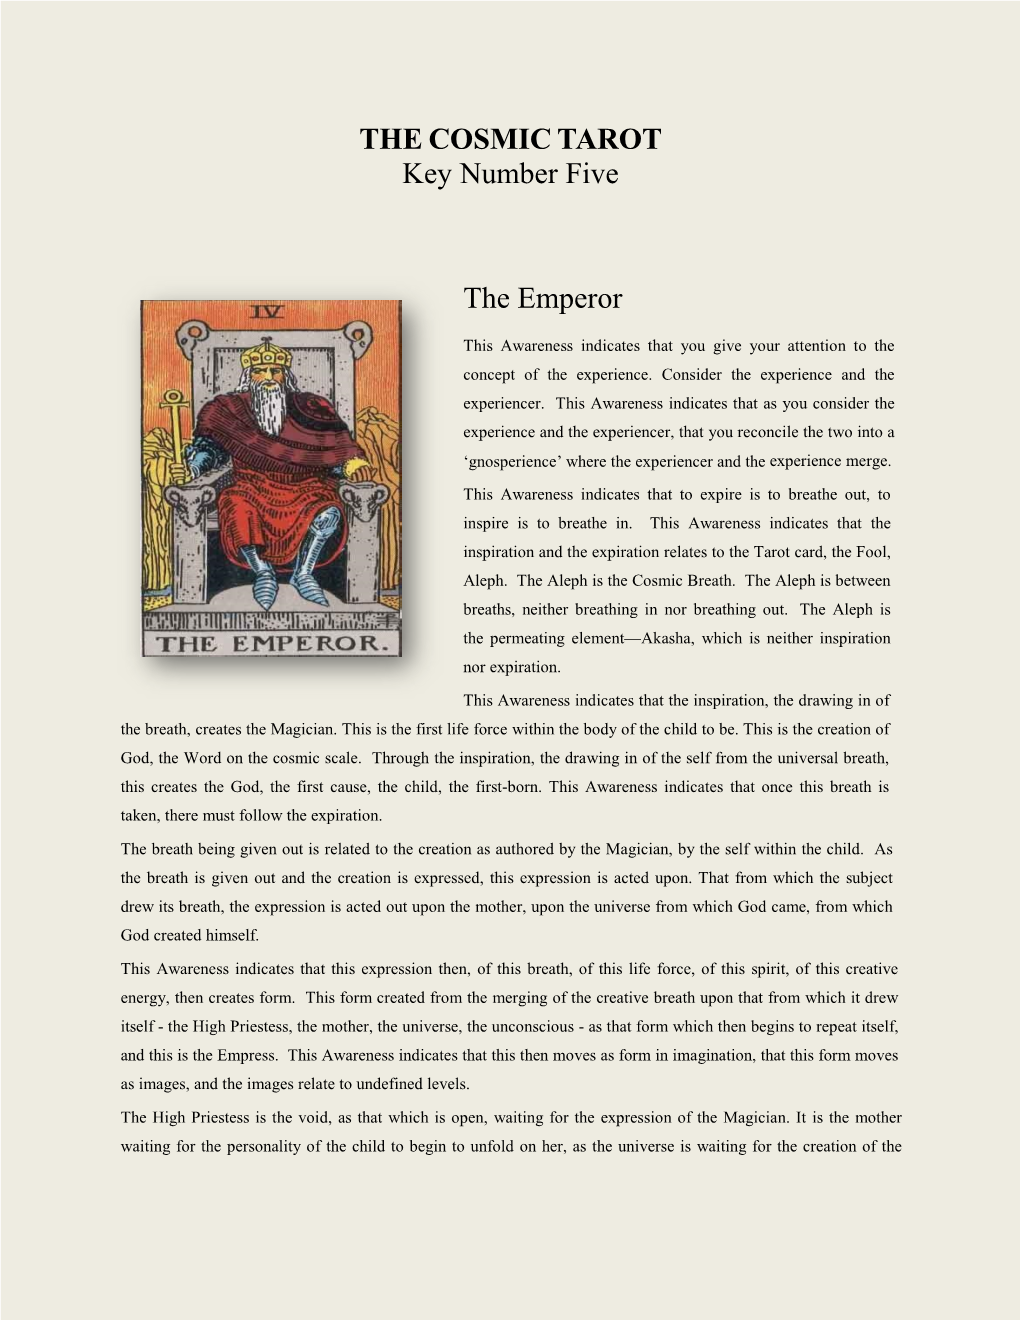 THE COSMIC TAROT Key Number Five the Emperor